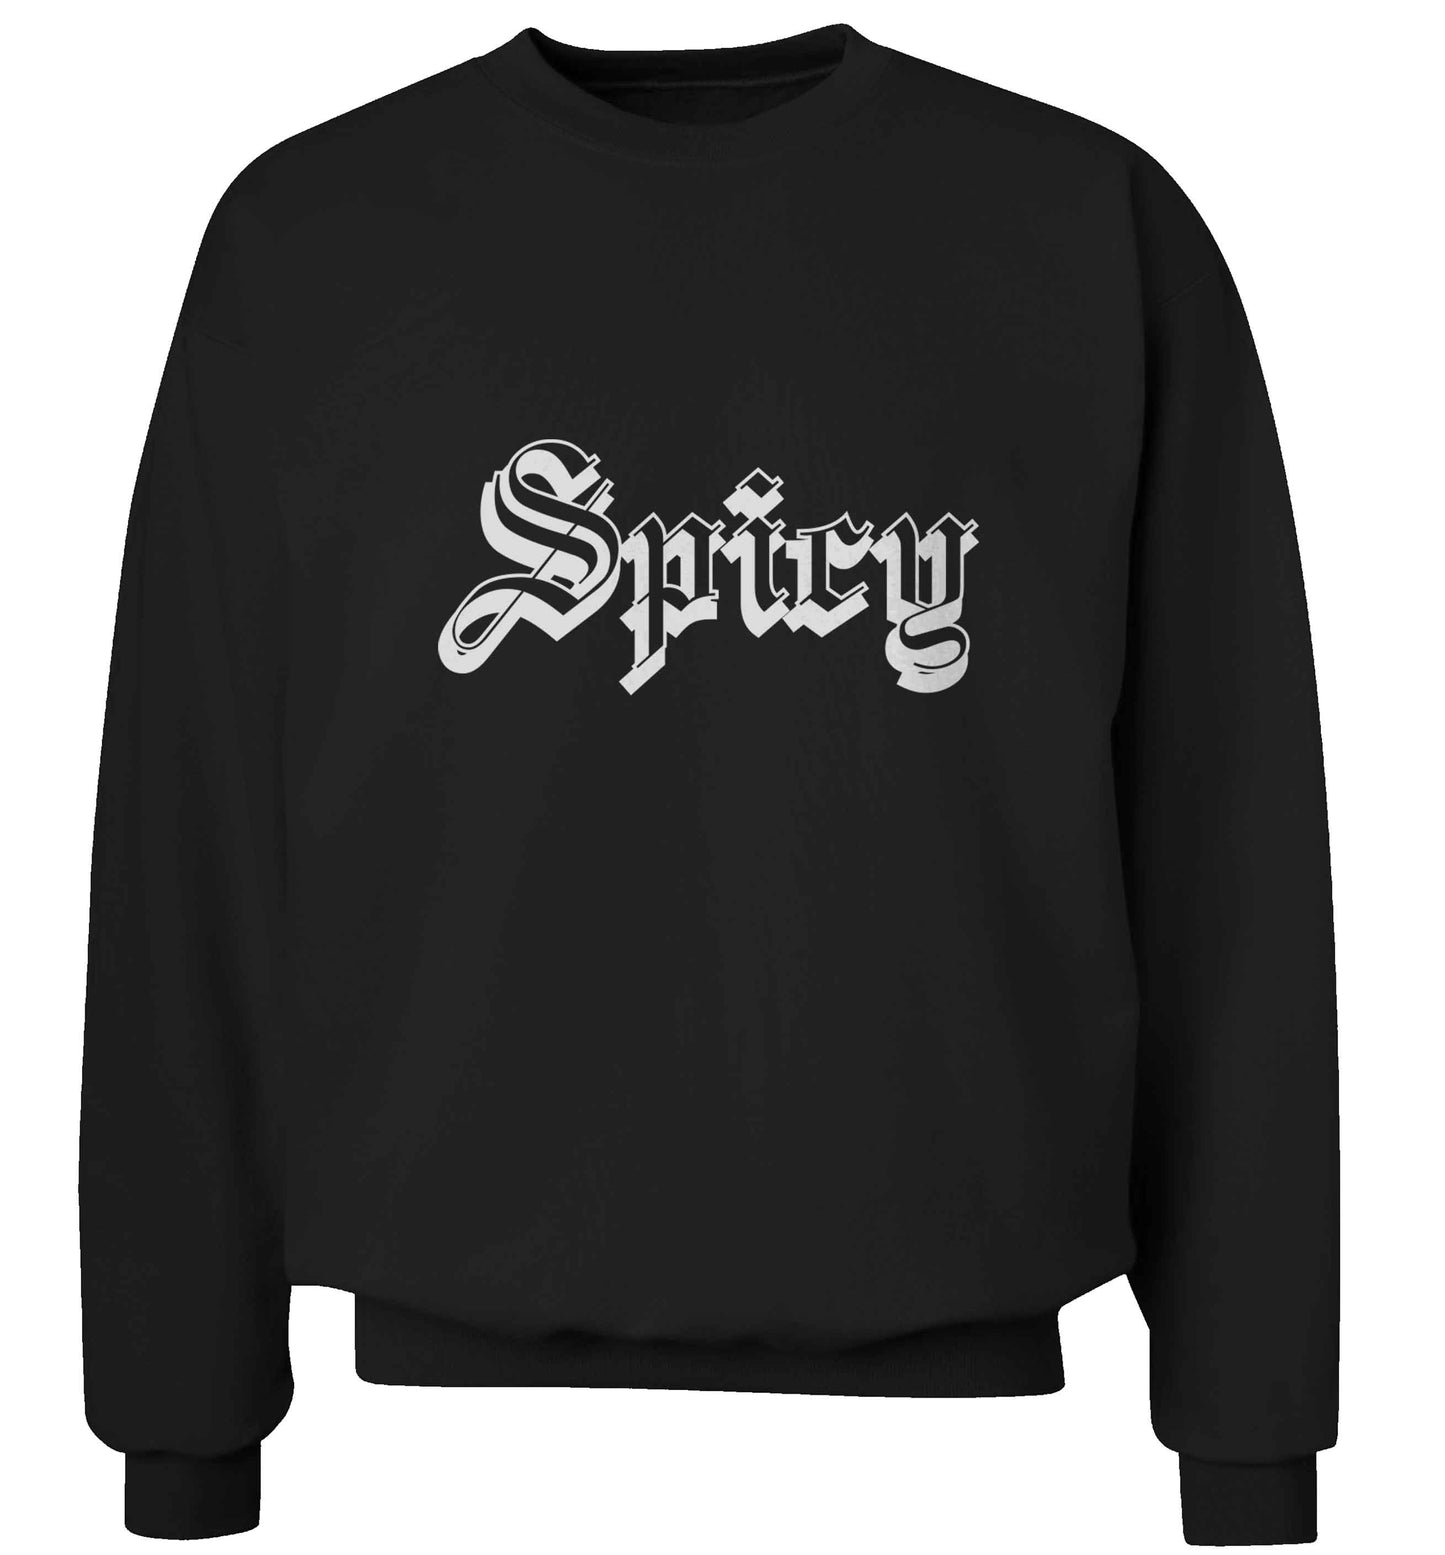 Spicy adult's unisex black sweater 2XL